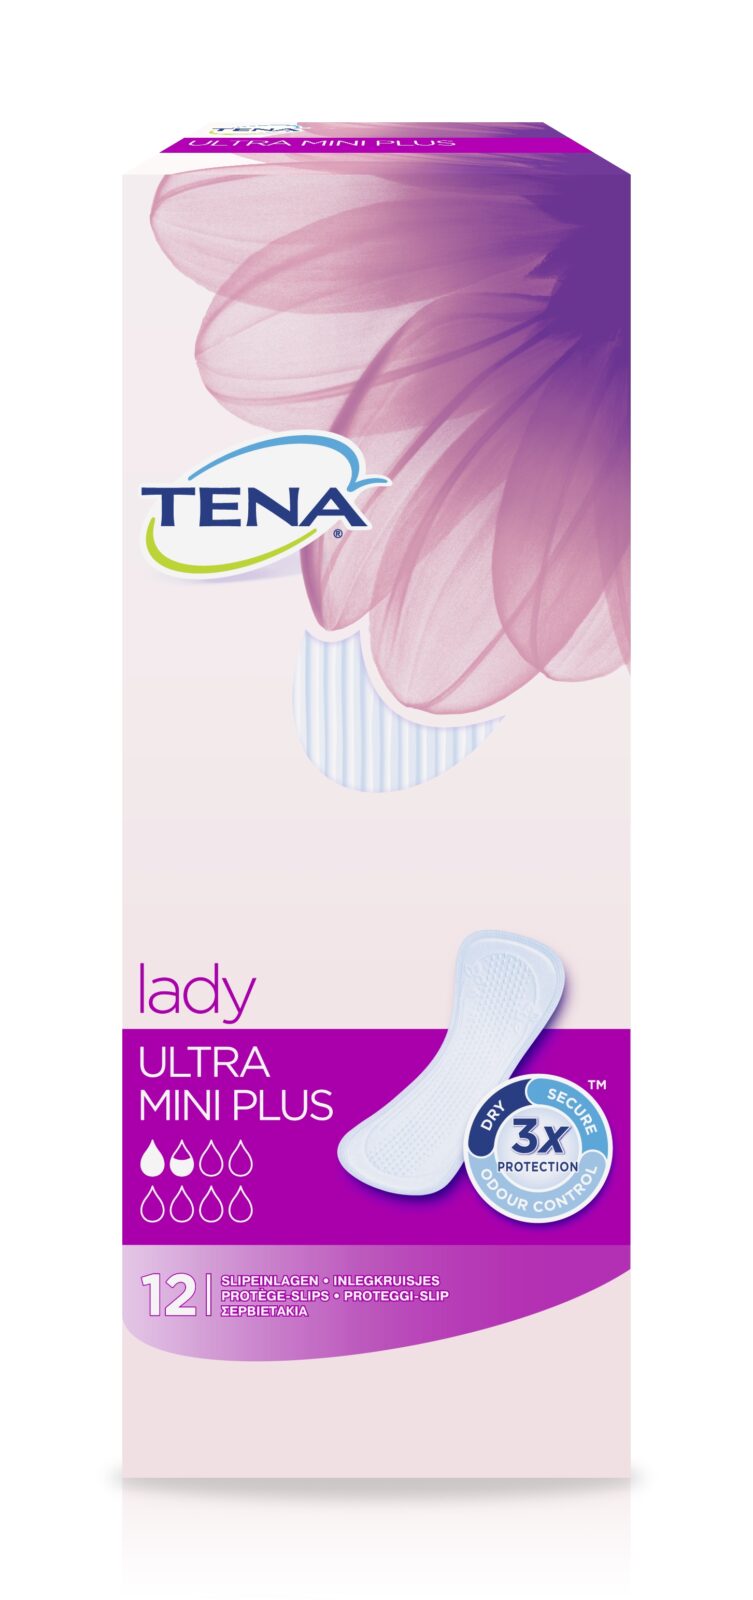 TENA_Lady_UltraMiniPlus